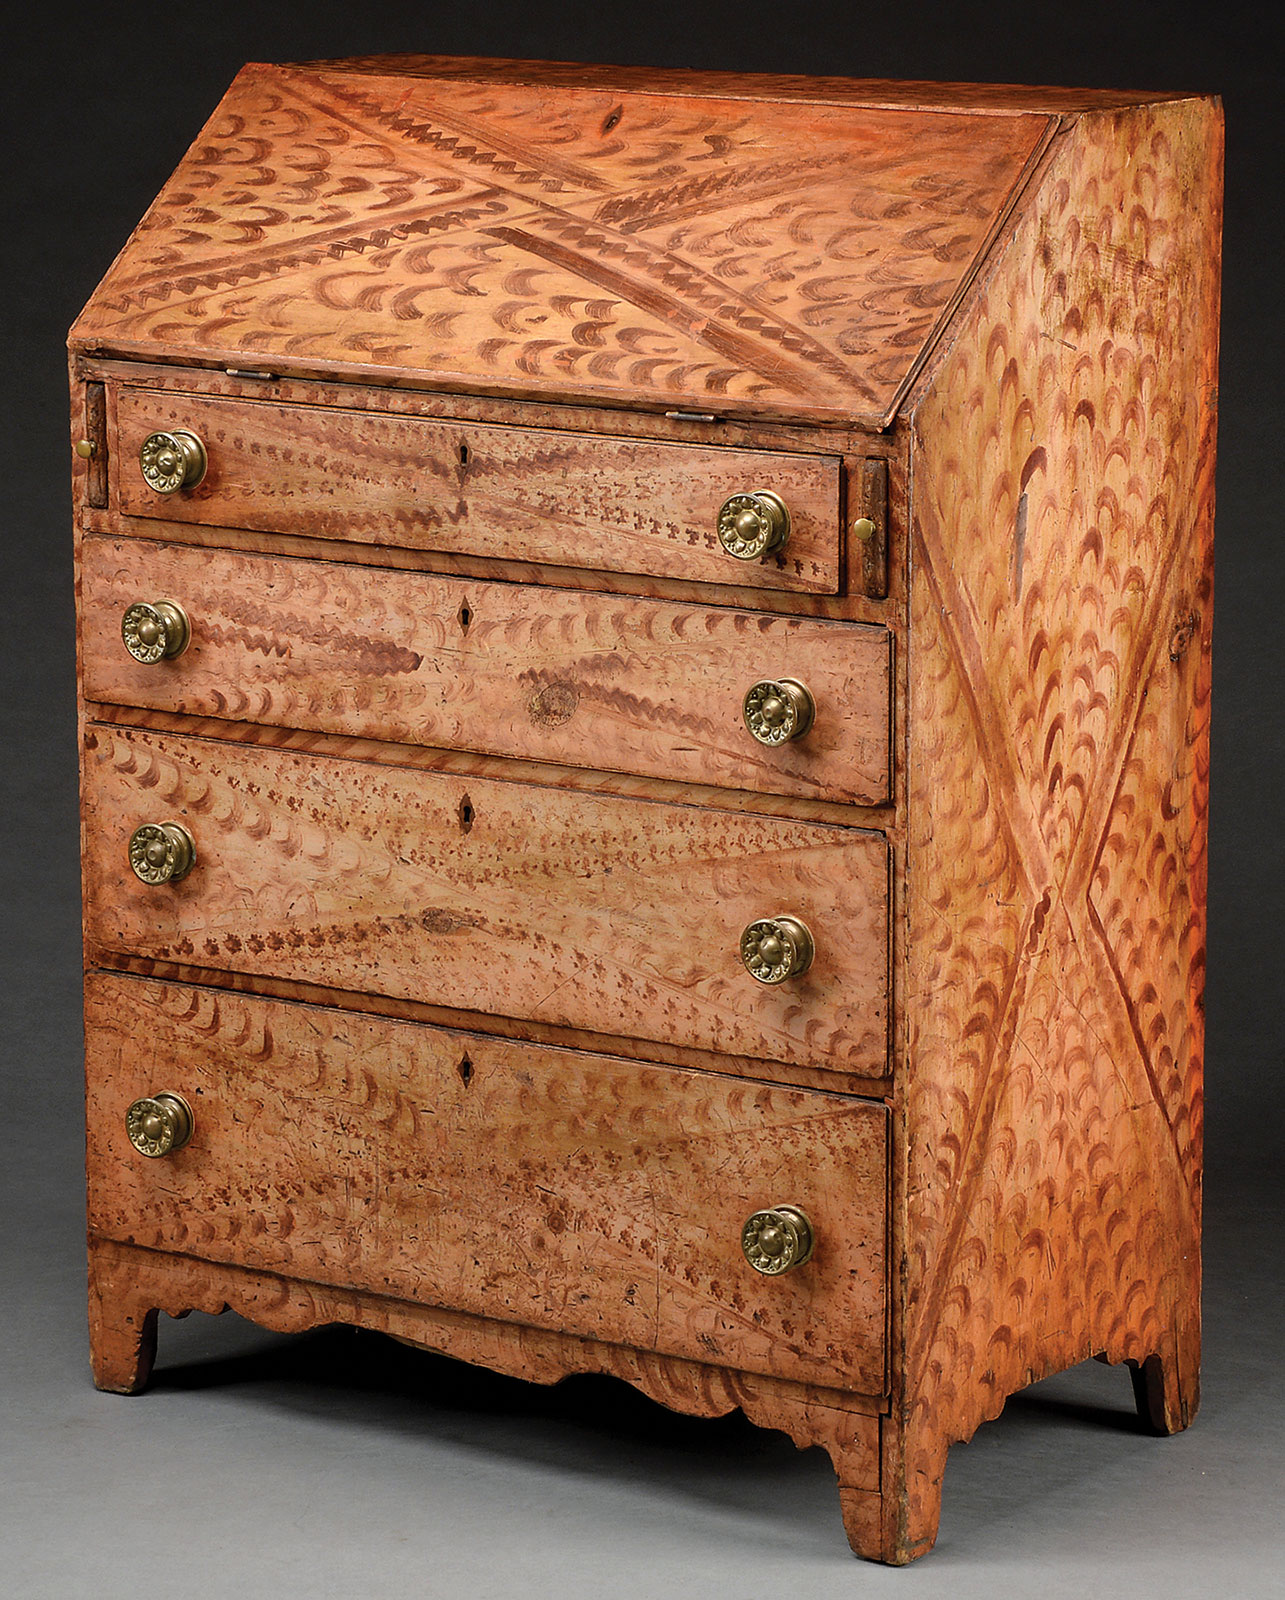 Exceptional Grain Painted Slant Lid Pine Desk Signed George Pierce, Manlius, New York, estimated at $8,000-12,000.